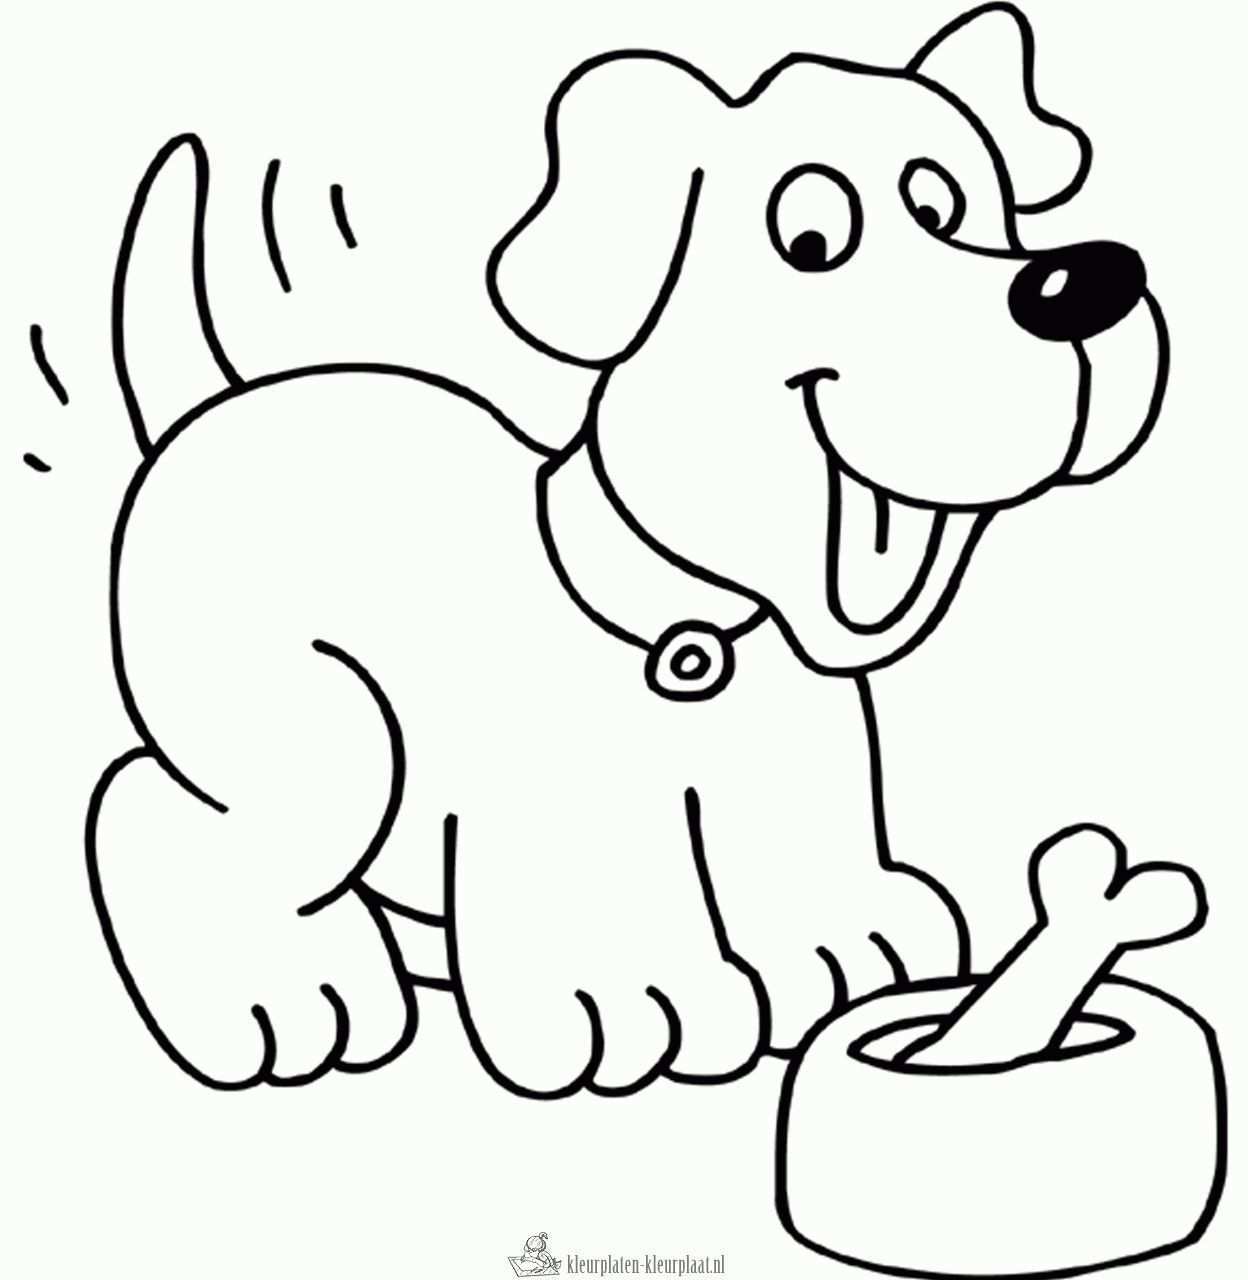 Kleurplaat Hond Animal Coloring Pages Art Drawings For Kids Coloring Books